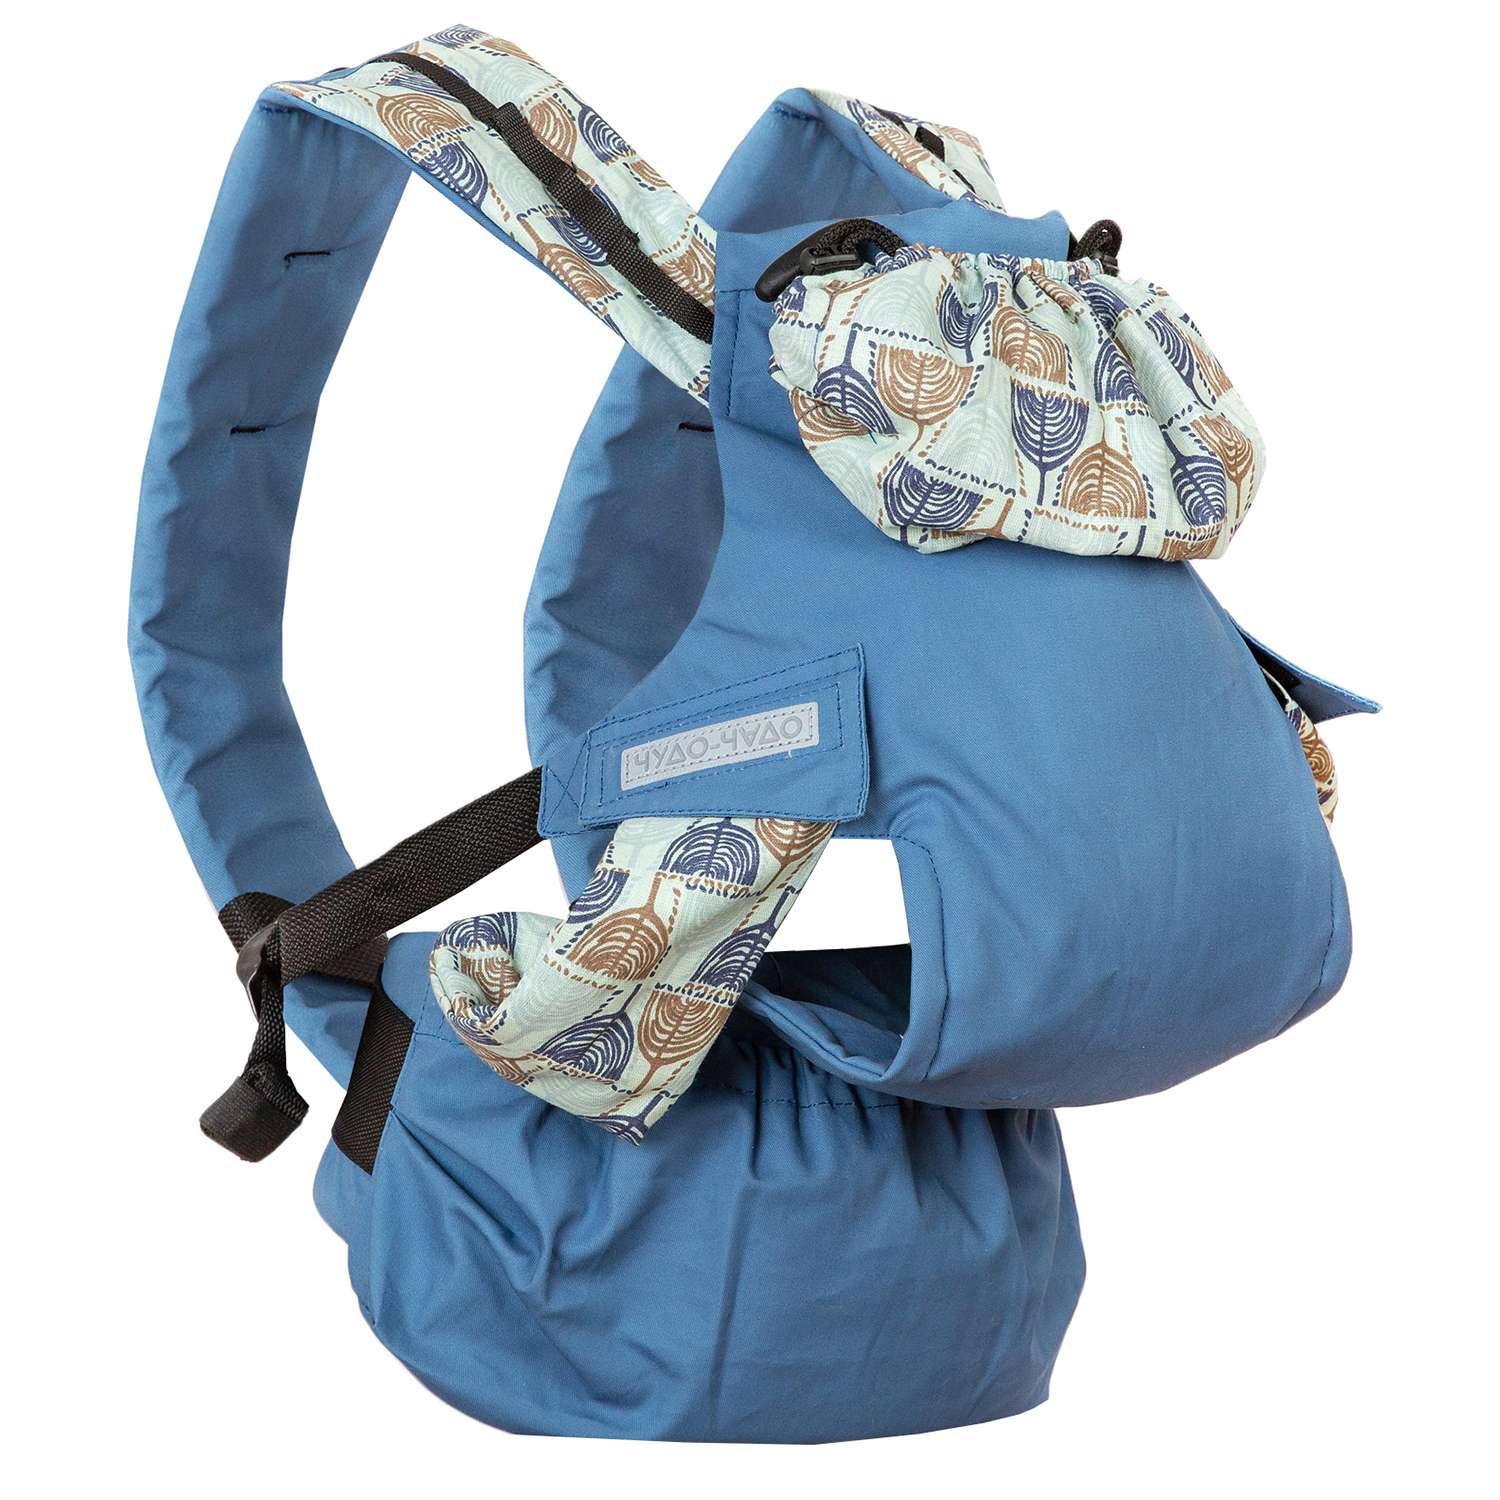 Слинг-рюкзак Чудо-чадо переноска для детей Бебимобиль Позитив синий/деревья - фото 1